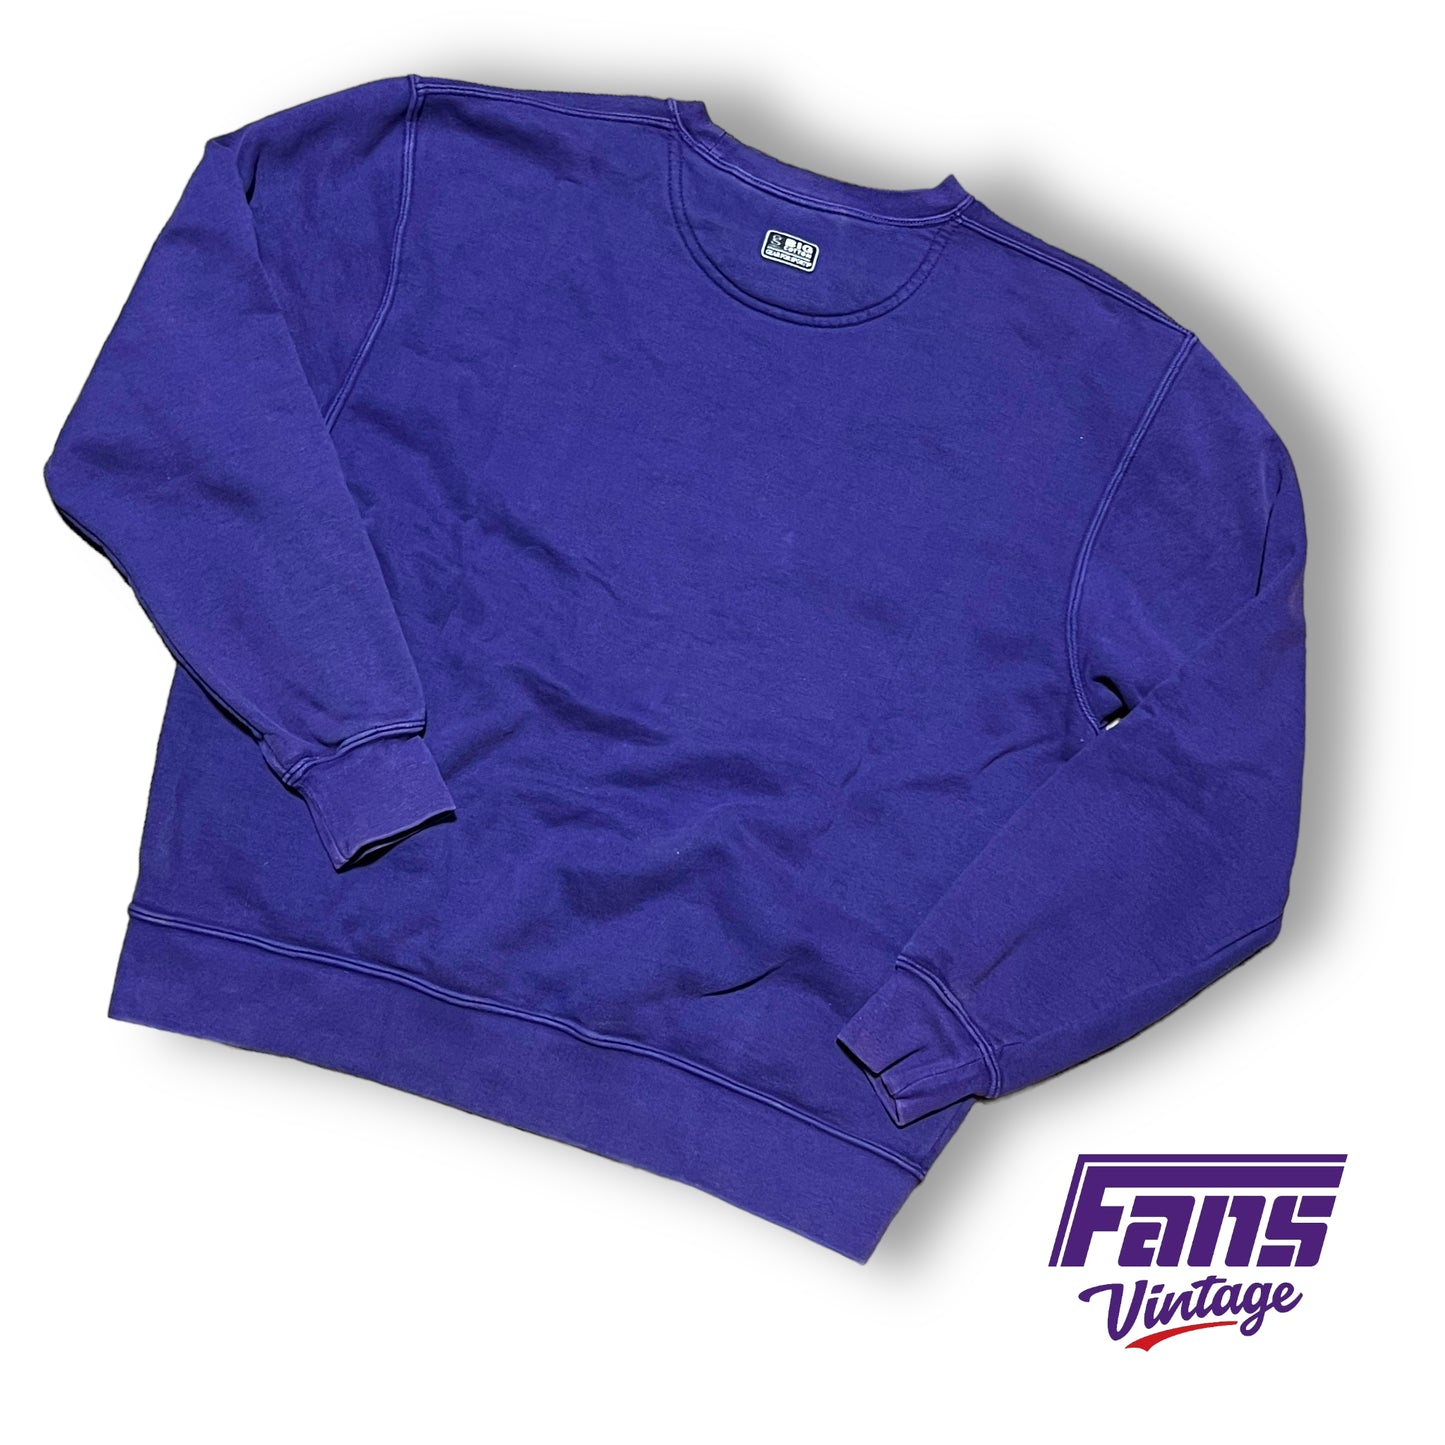 Y2K Vintage TCU Crewneck Sweater - ULTRA SOFT!